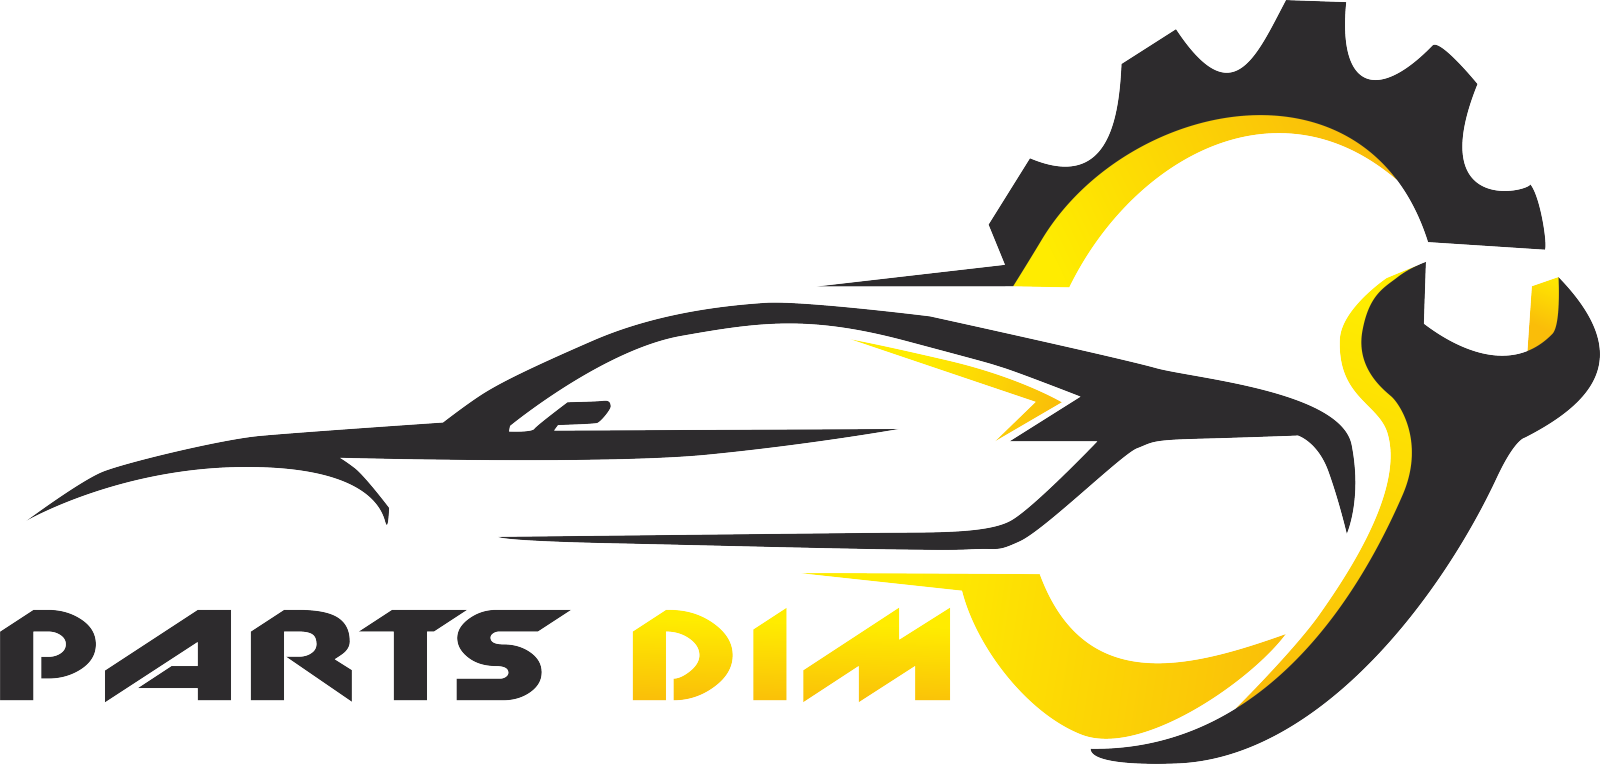 PartsDim logo